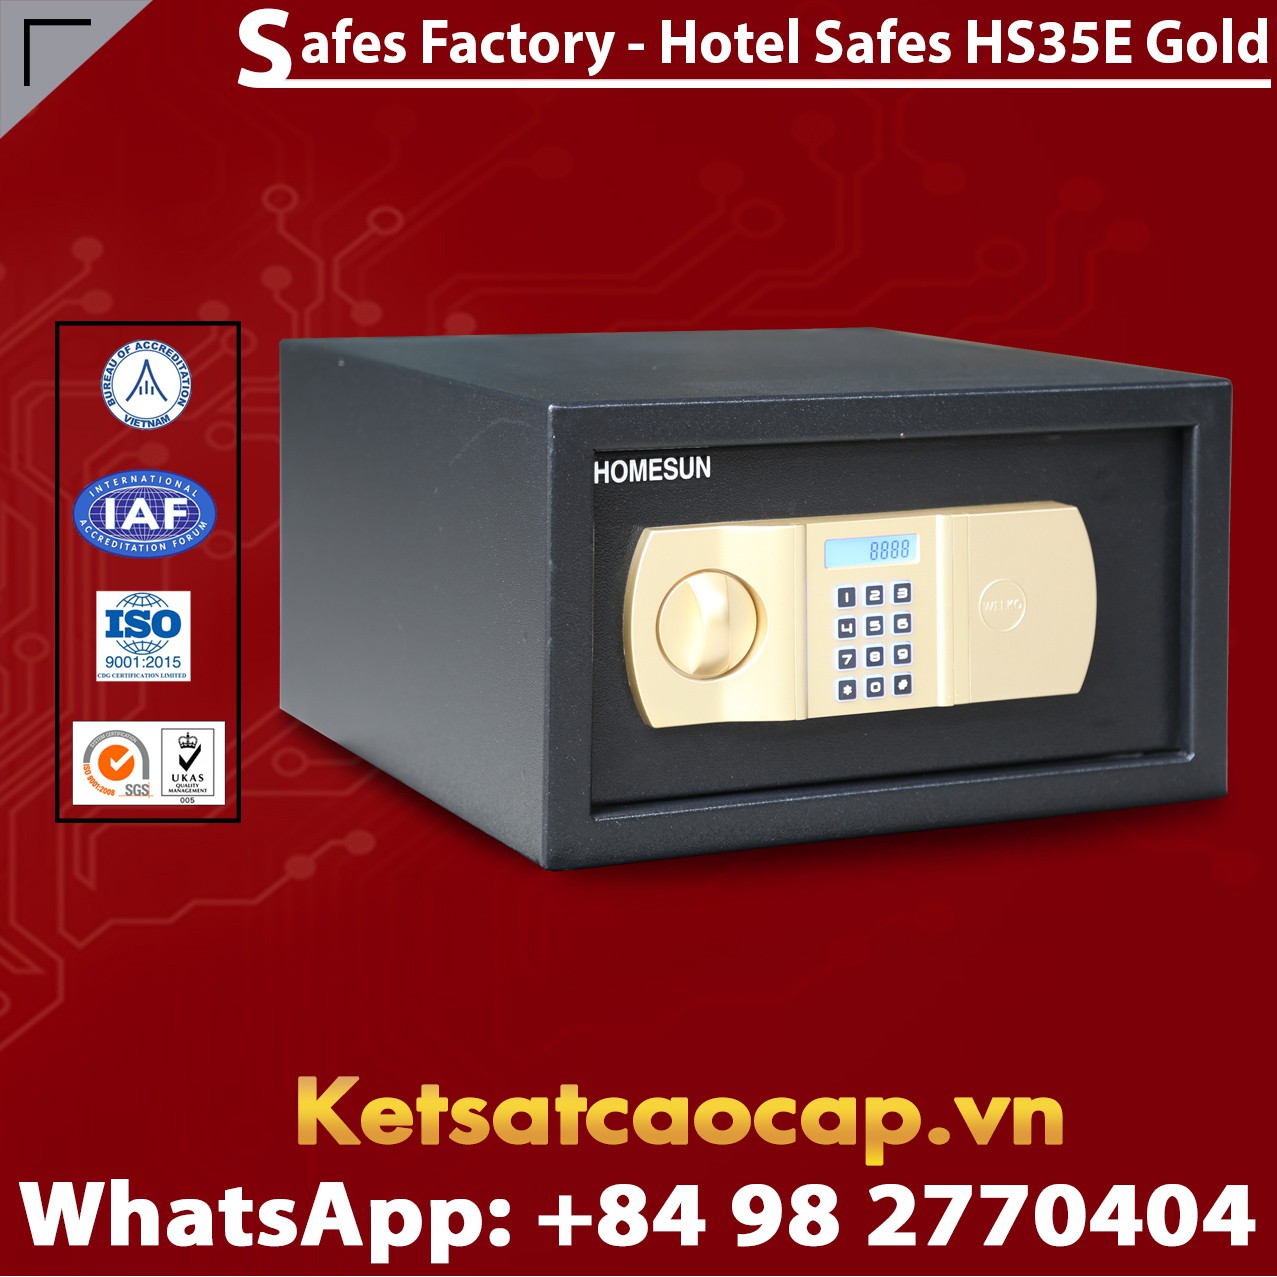 Best Hotel Safe For Home HOMESUN HS35 E Gold